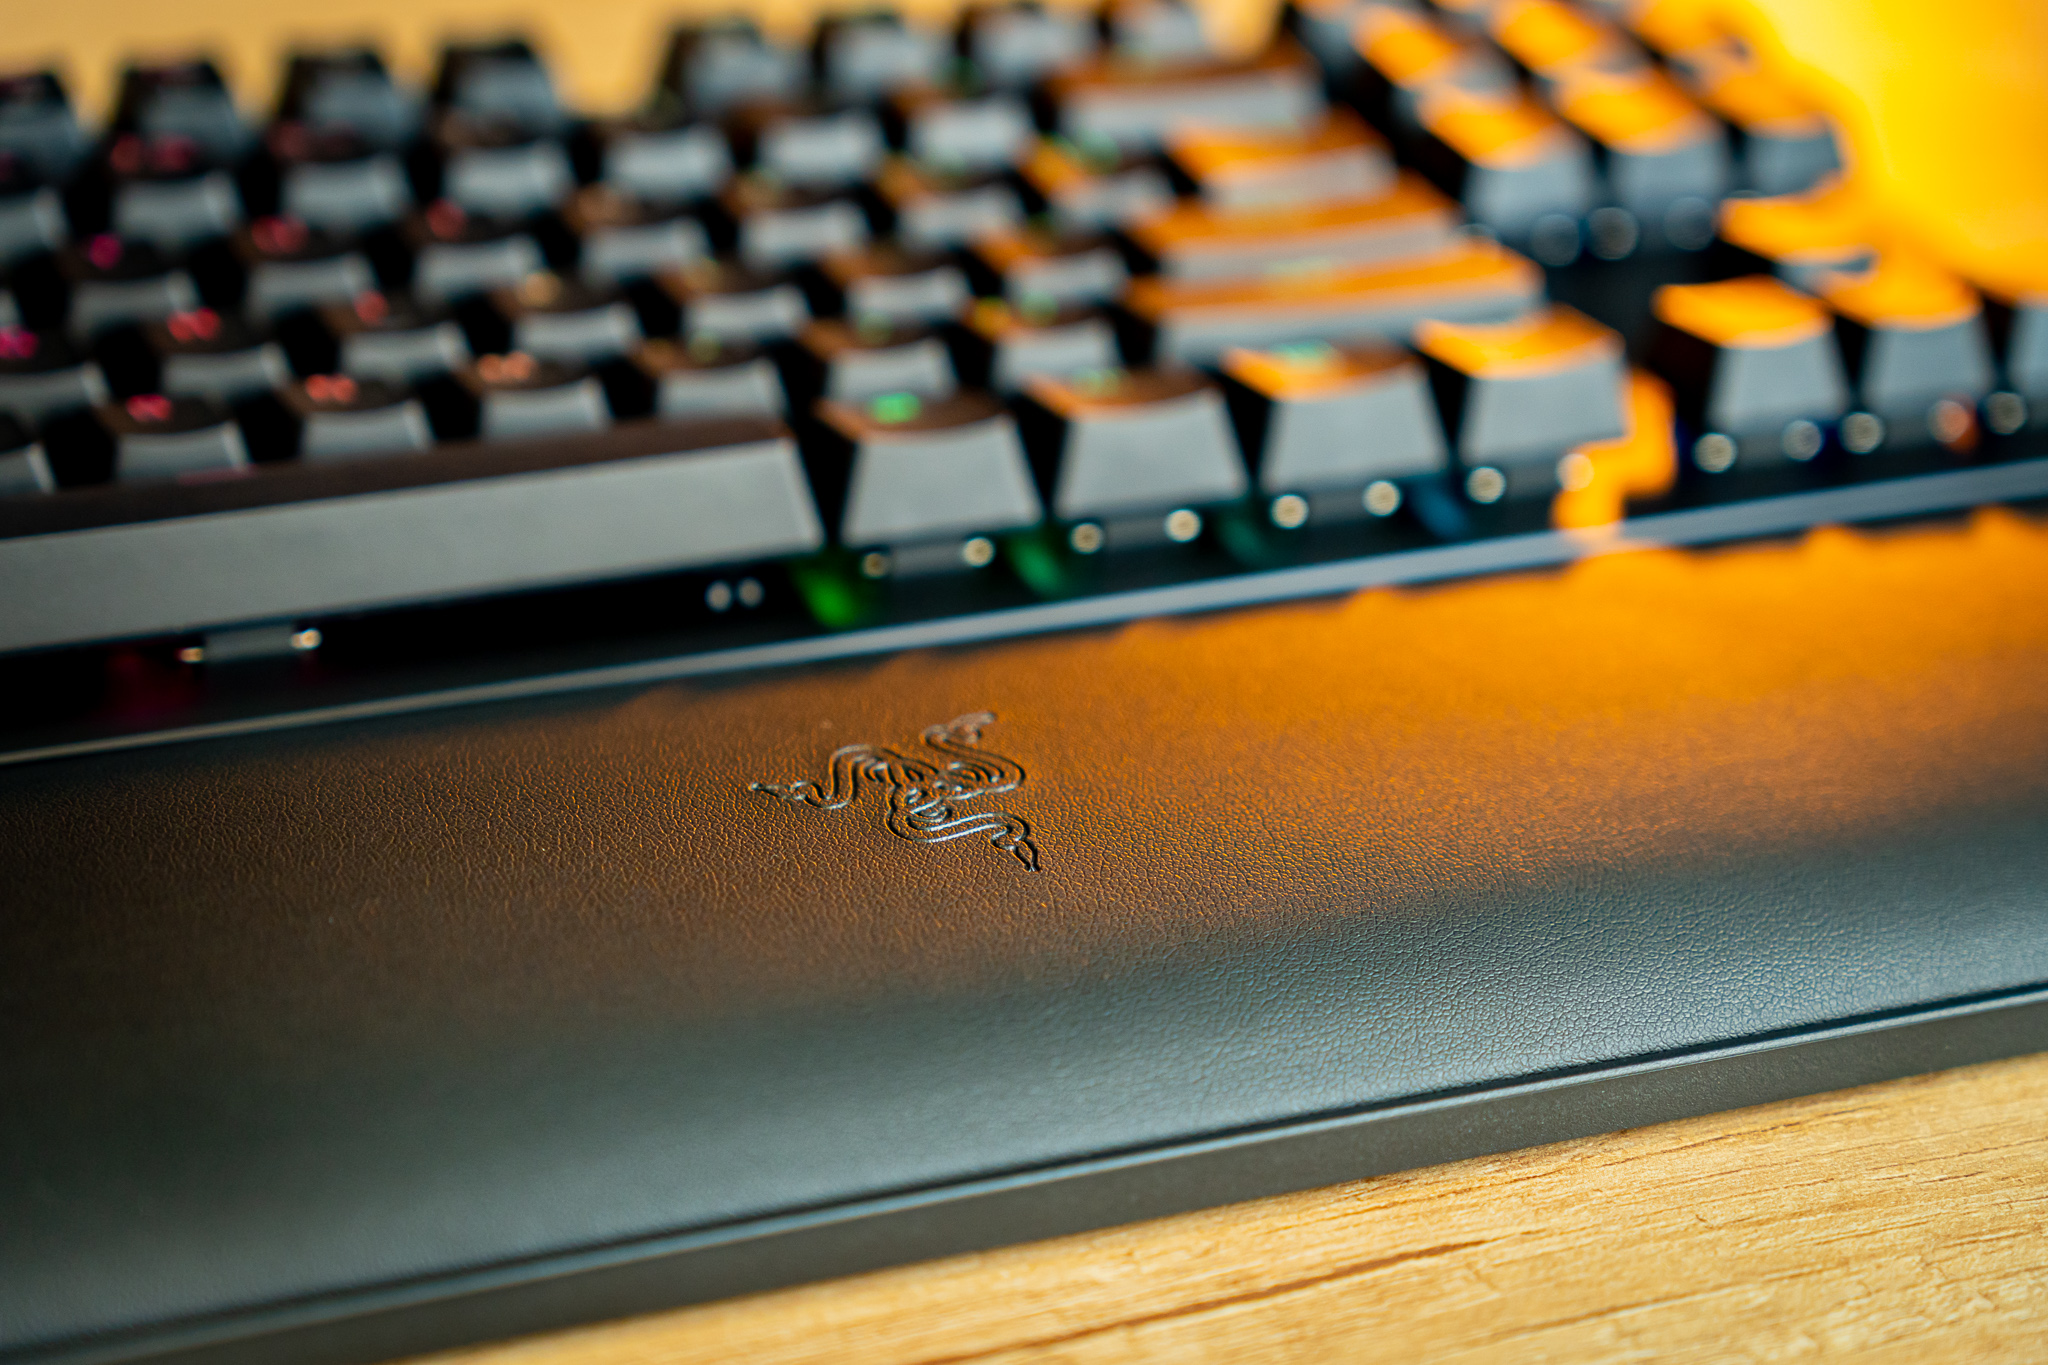  Razer Huntsman V2 Optical Gaming Keyboard: Fastest